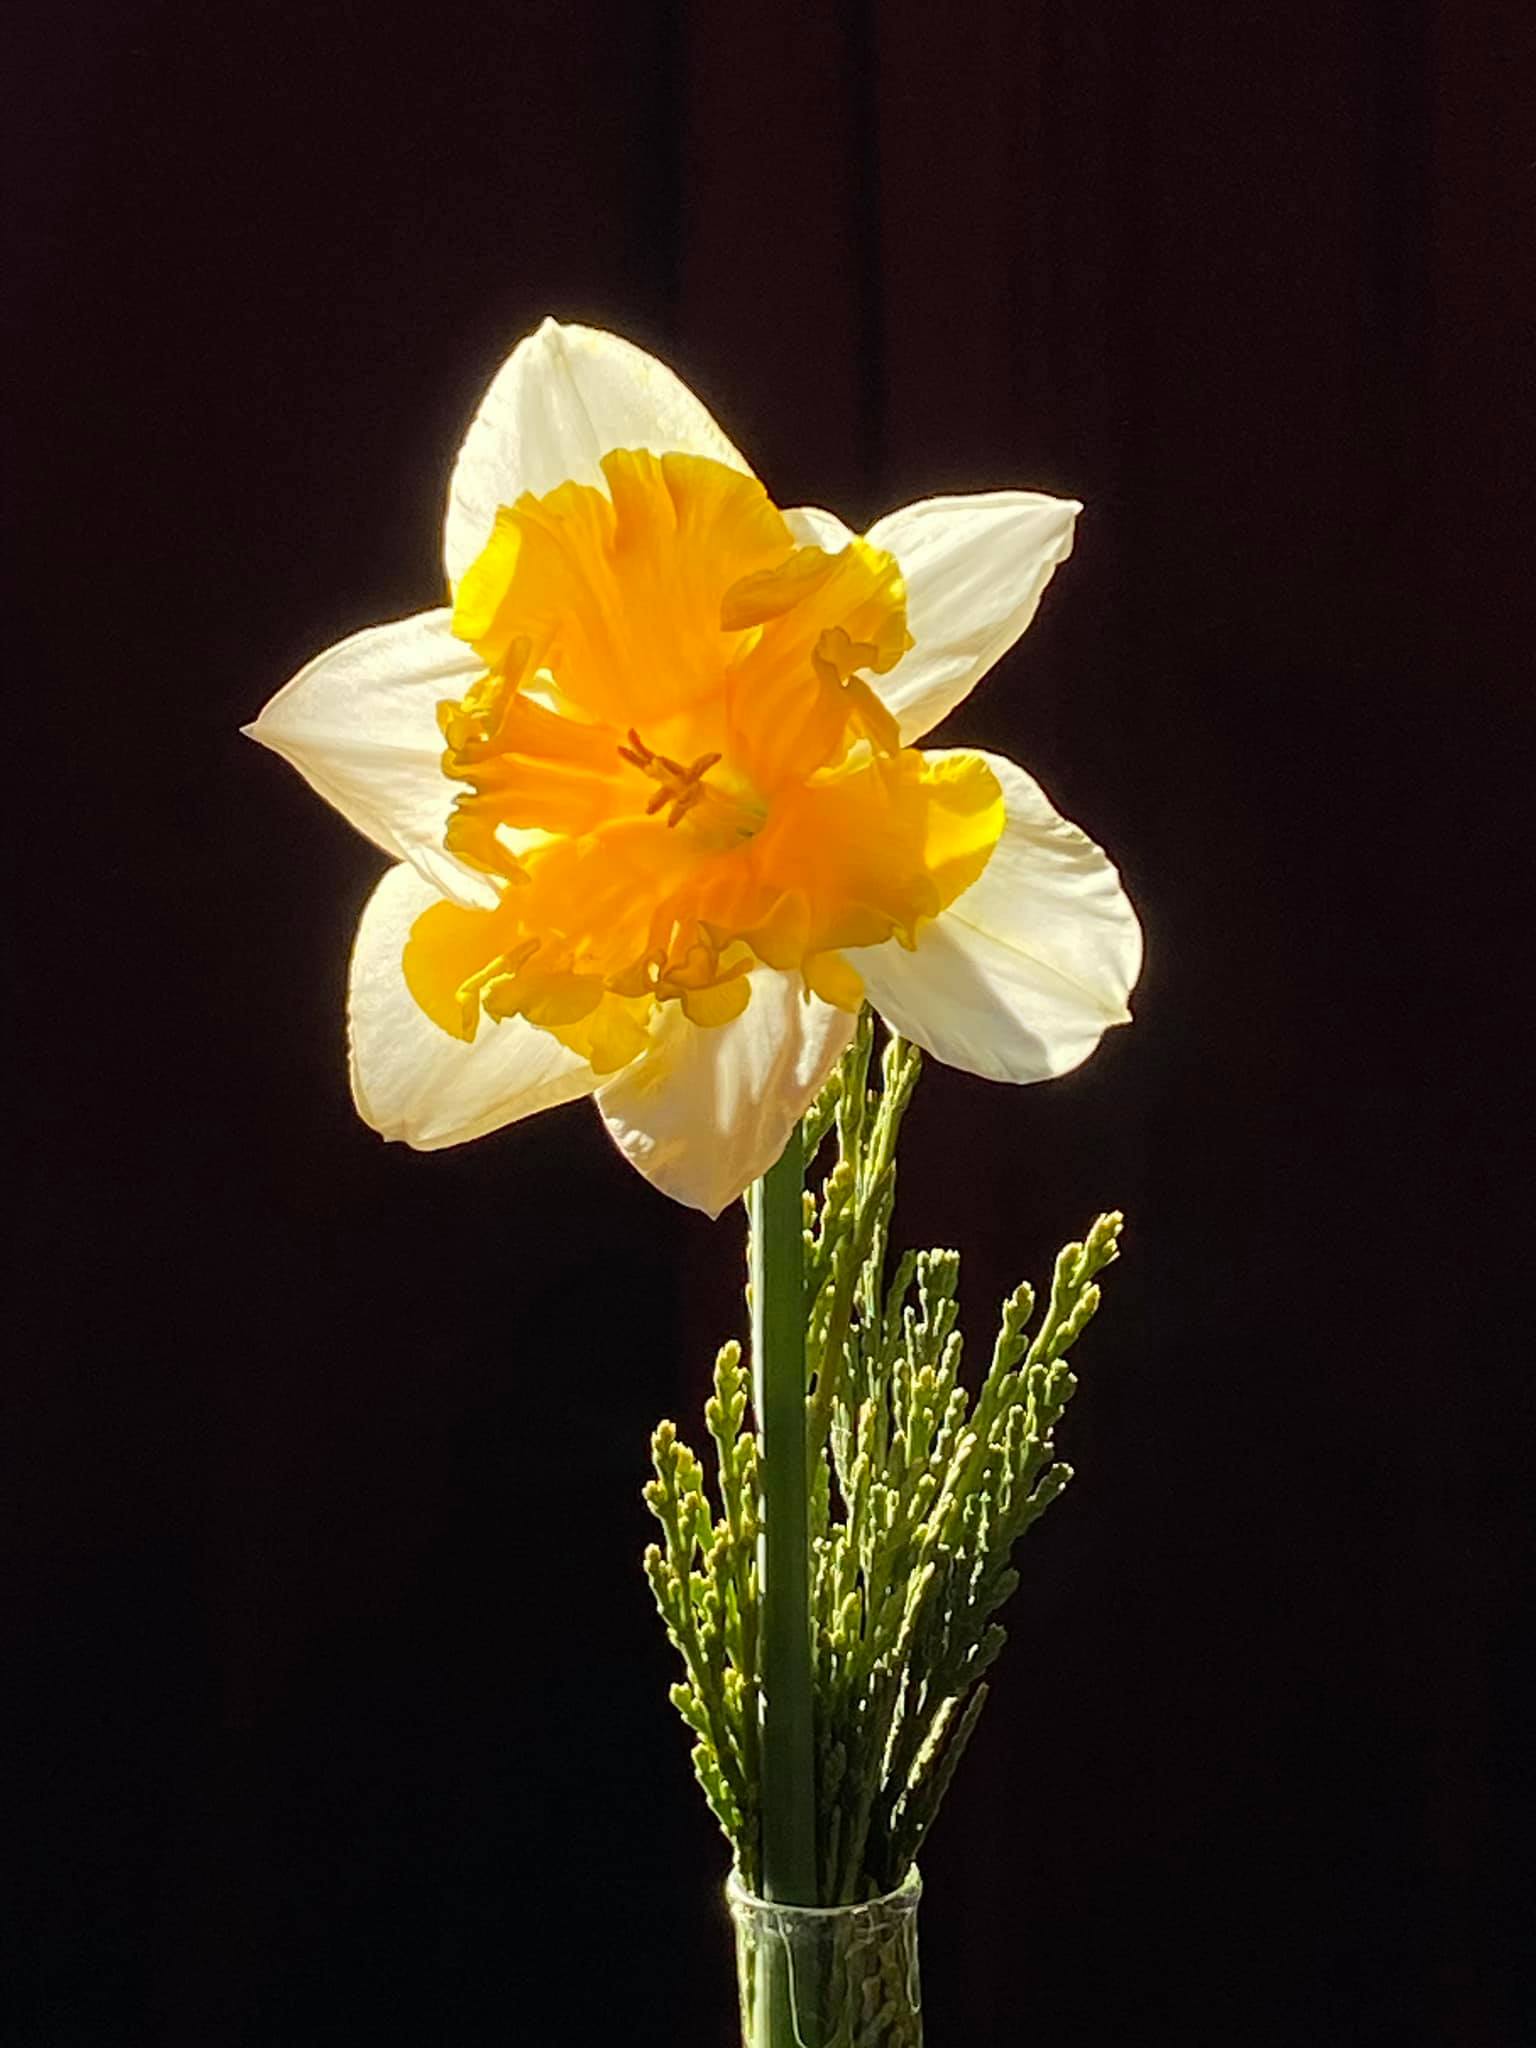 Daffodil from the Julian Daffodil Show